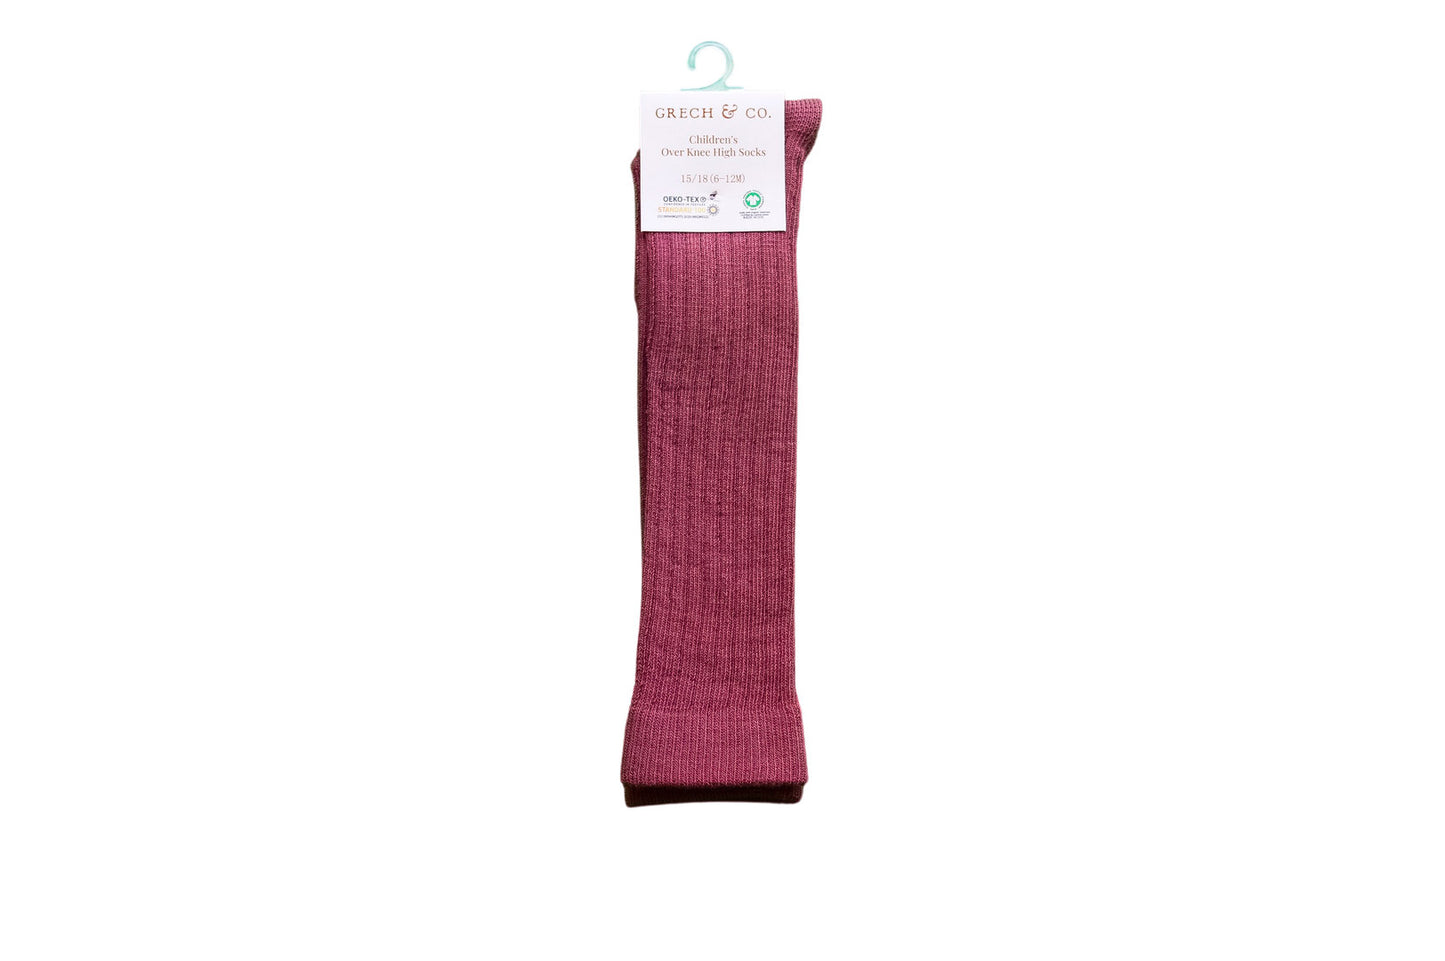 Kniestrümpfe - Farbe: Bulewood- GRECH & CO Knee High Socks